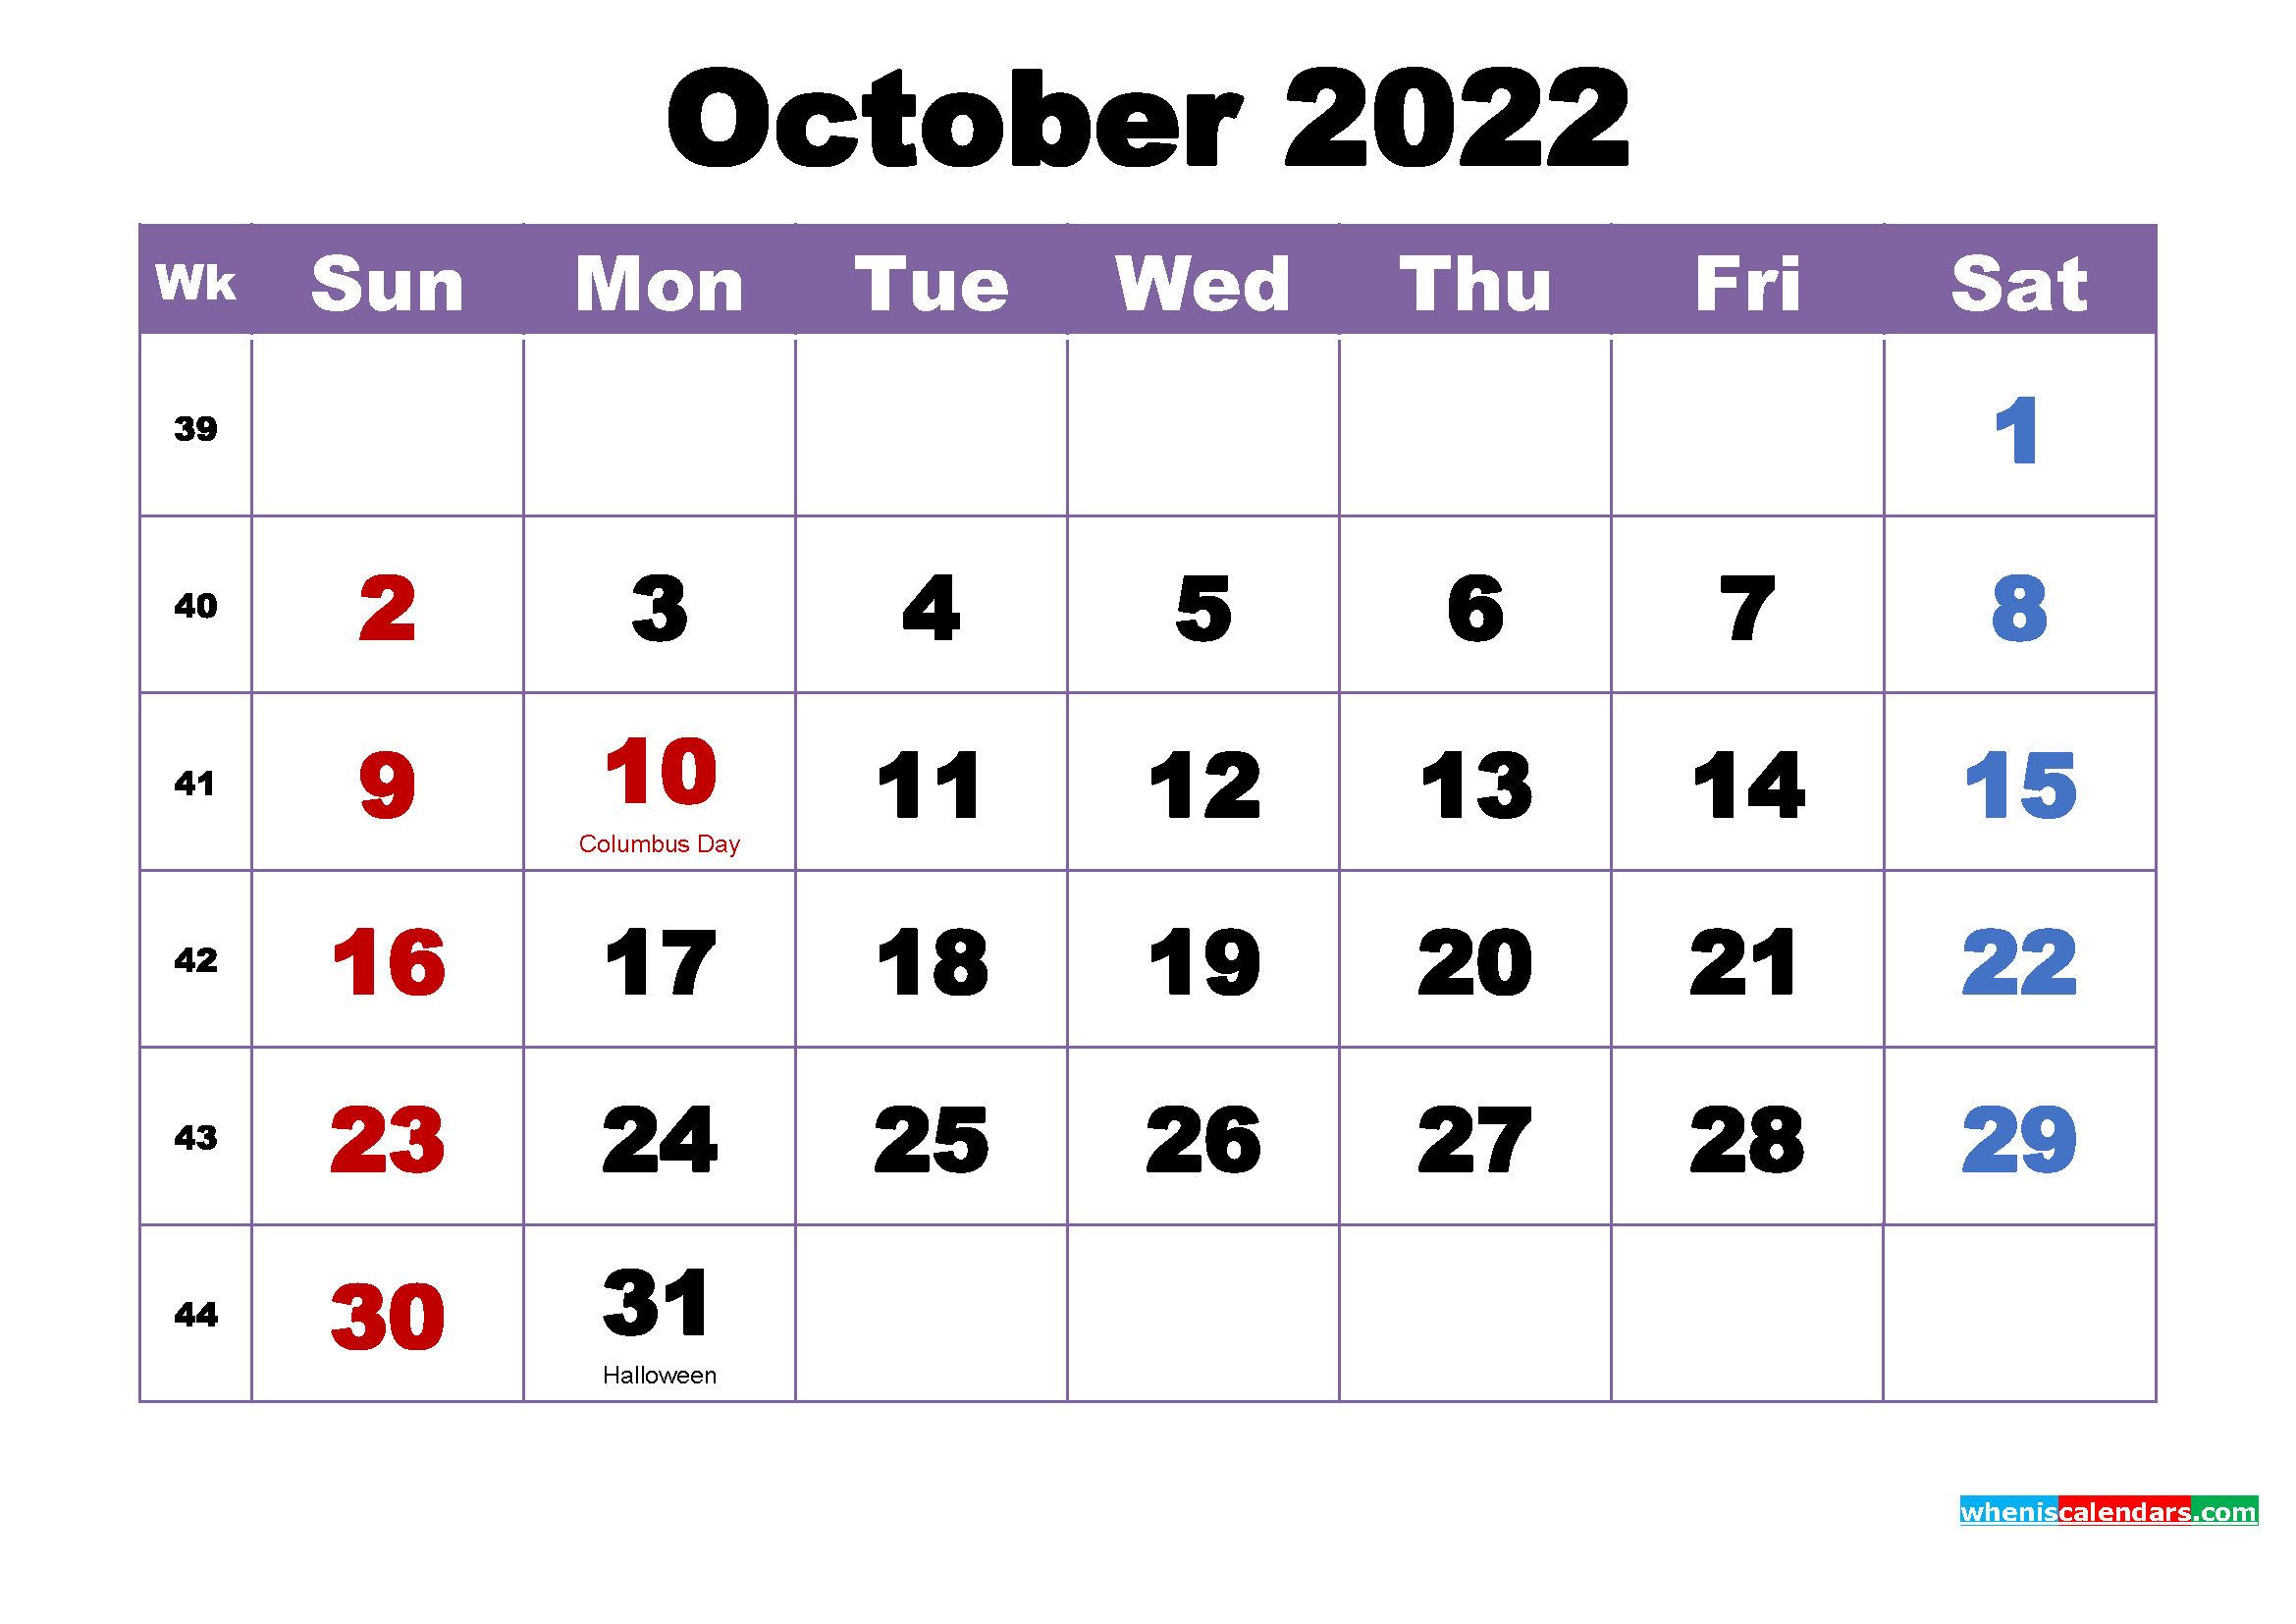 October Calendar For 2022 Free October 2022 Calendar With Holidays Printable